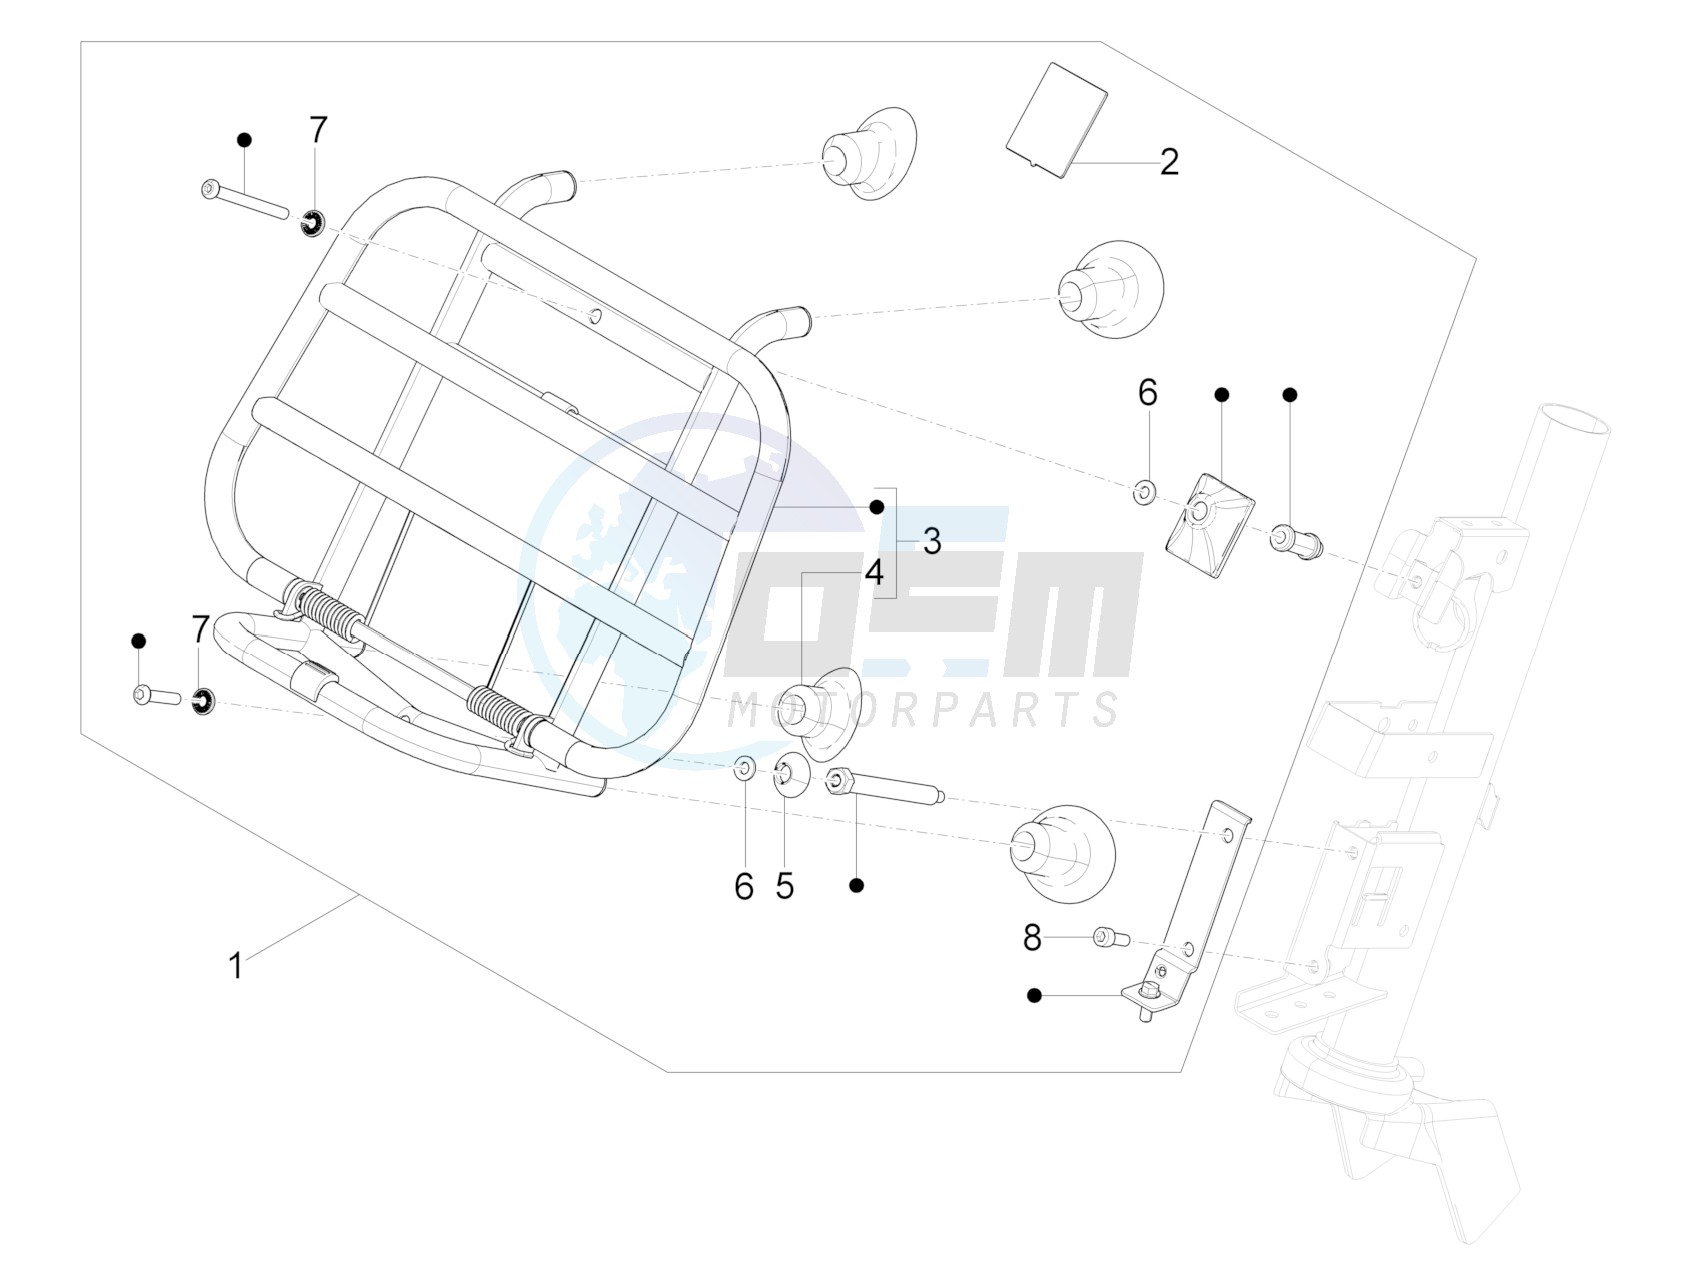 Front luggage rack blueprint